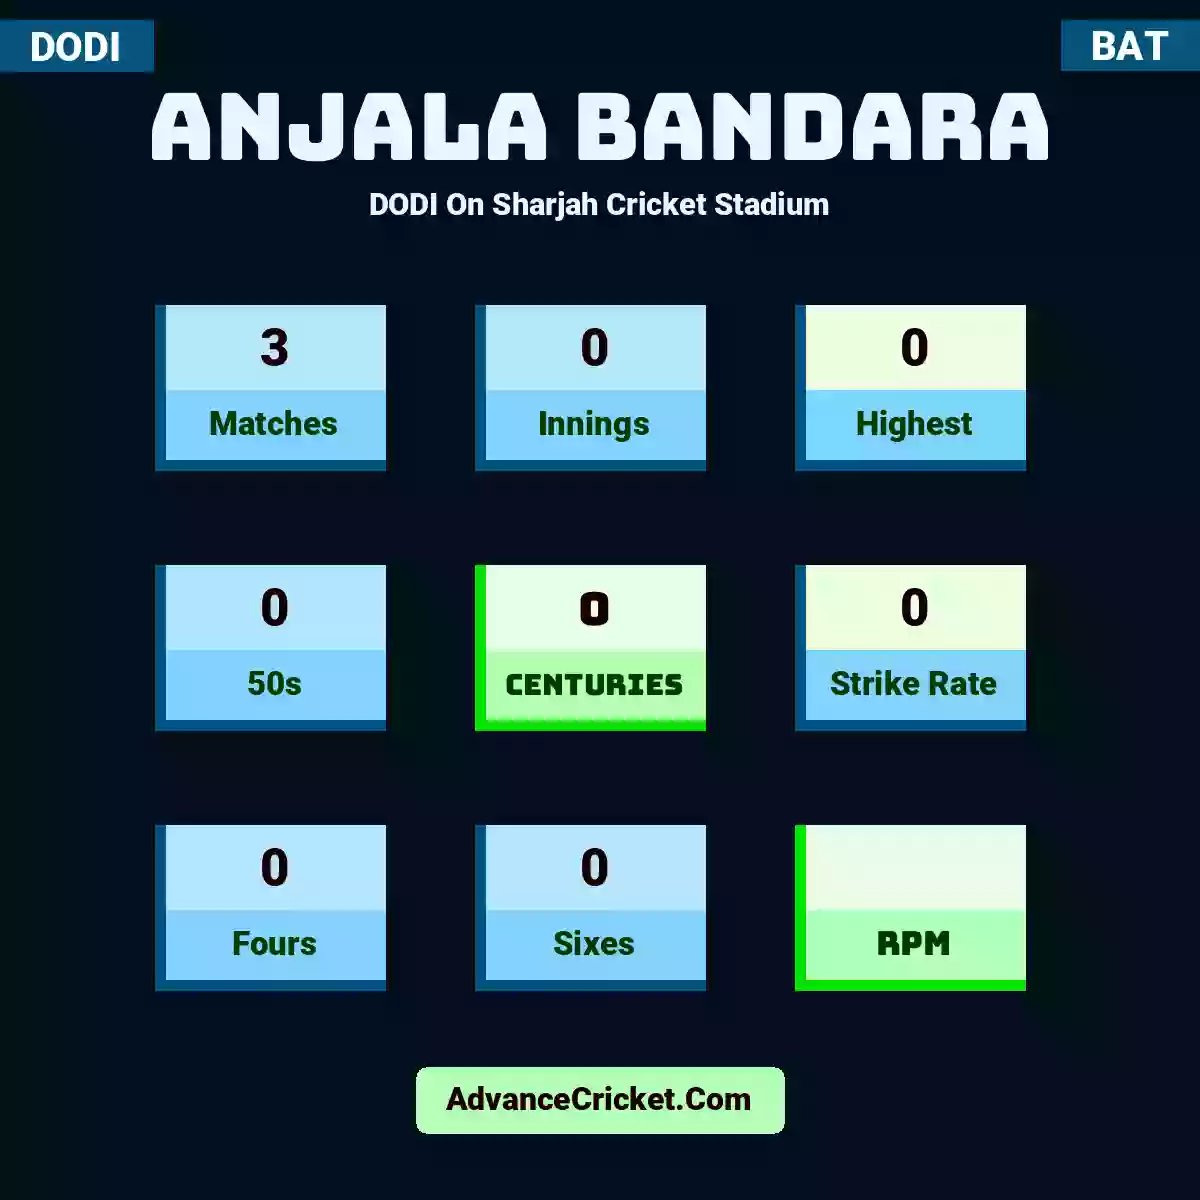 Anjala Bandara DODI  On Sharjah Cricket Stadium, Anjala Bandara played 3 matches, scored 0 runs as highest, 0 half-centuries, and 0 centuries, with a strike rate of 0. A.Bandara hit 0 fours and 0 sixes.